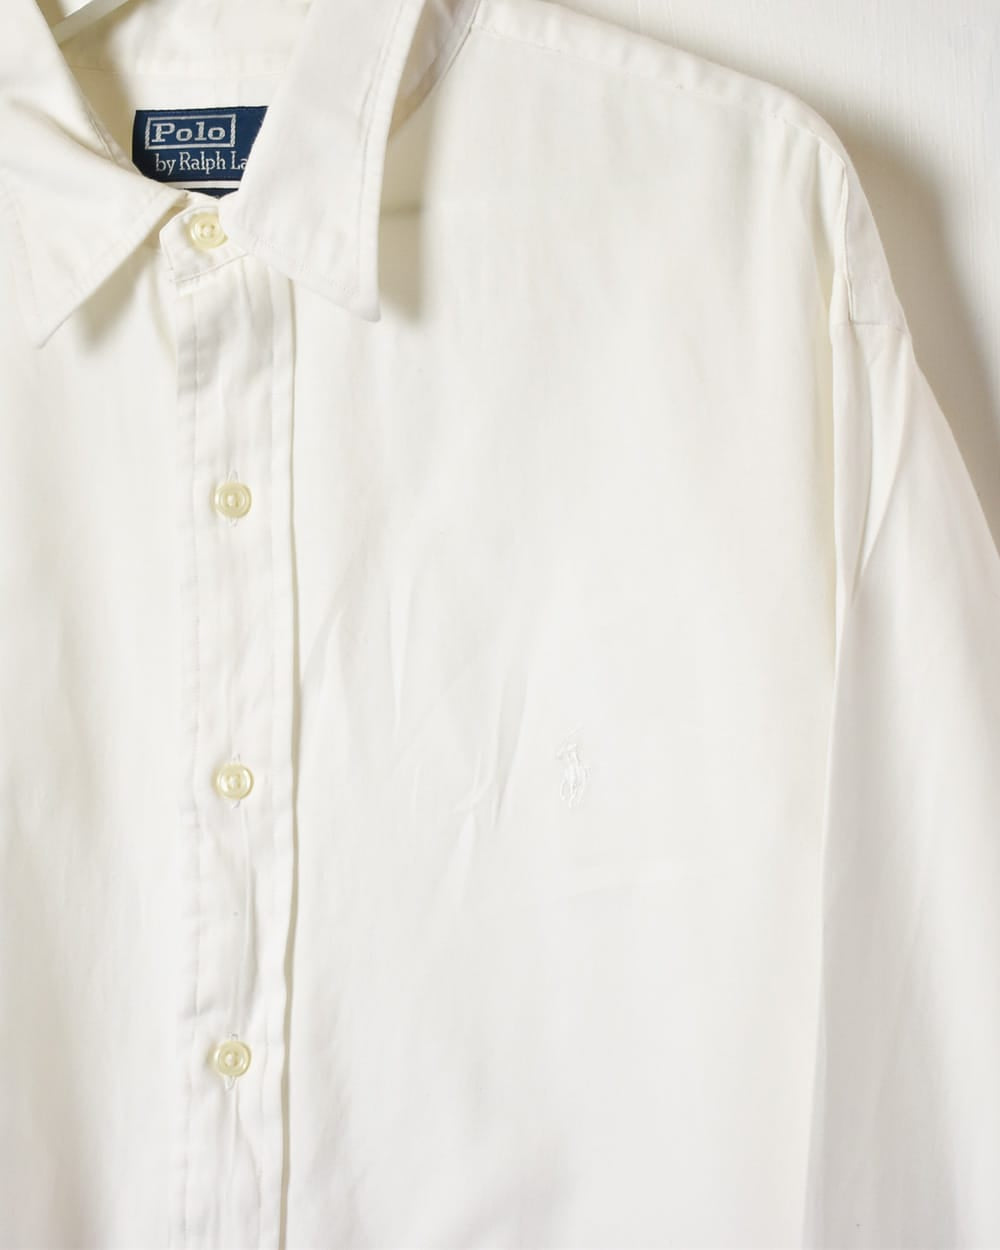 White Polo Ralph Lauren Andrew Shirt - X-Large